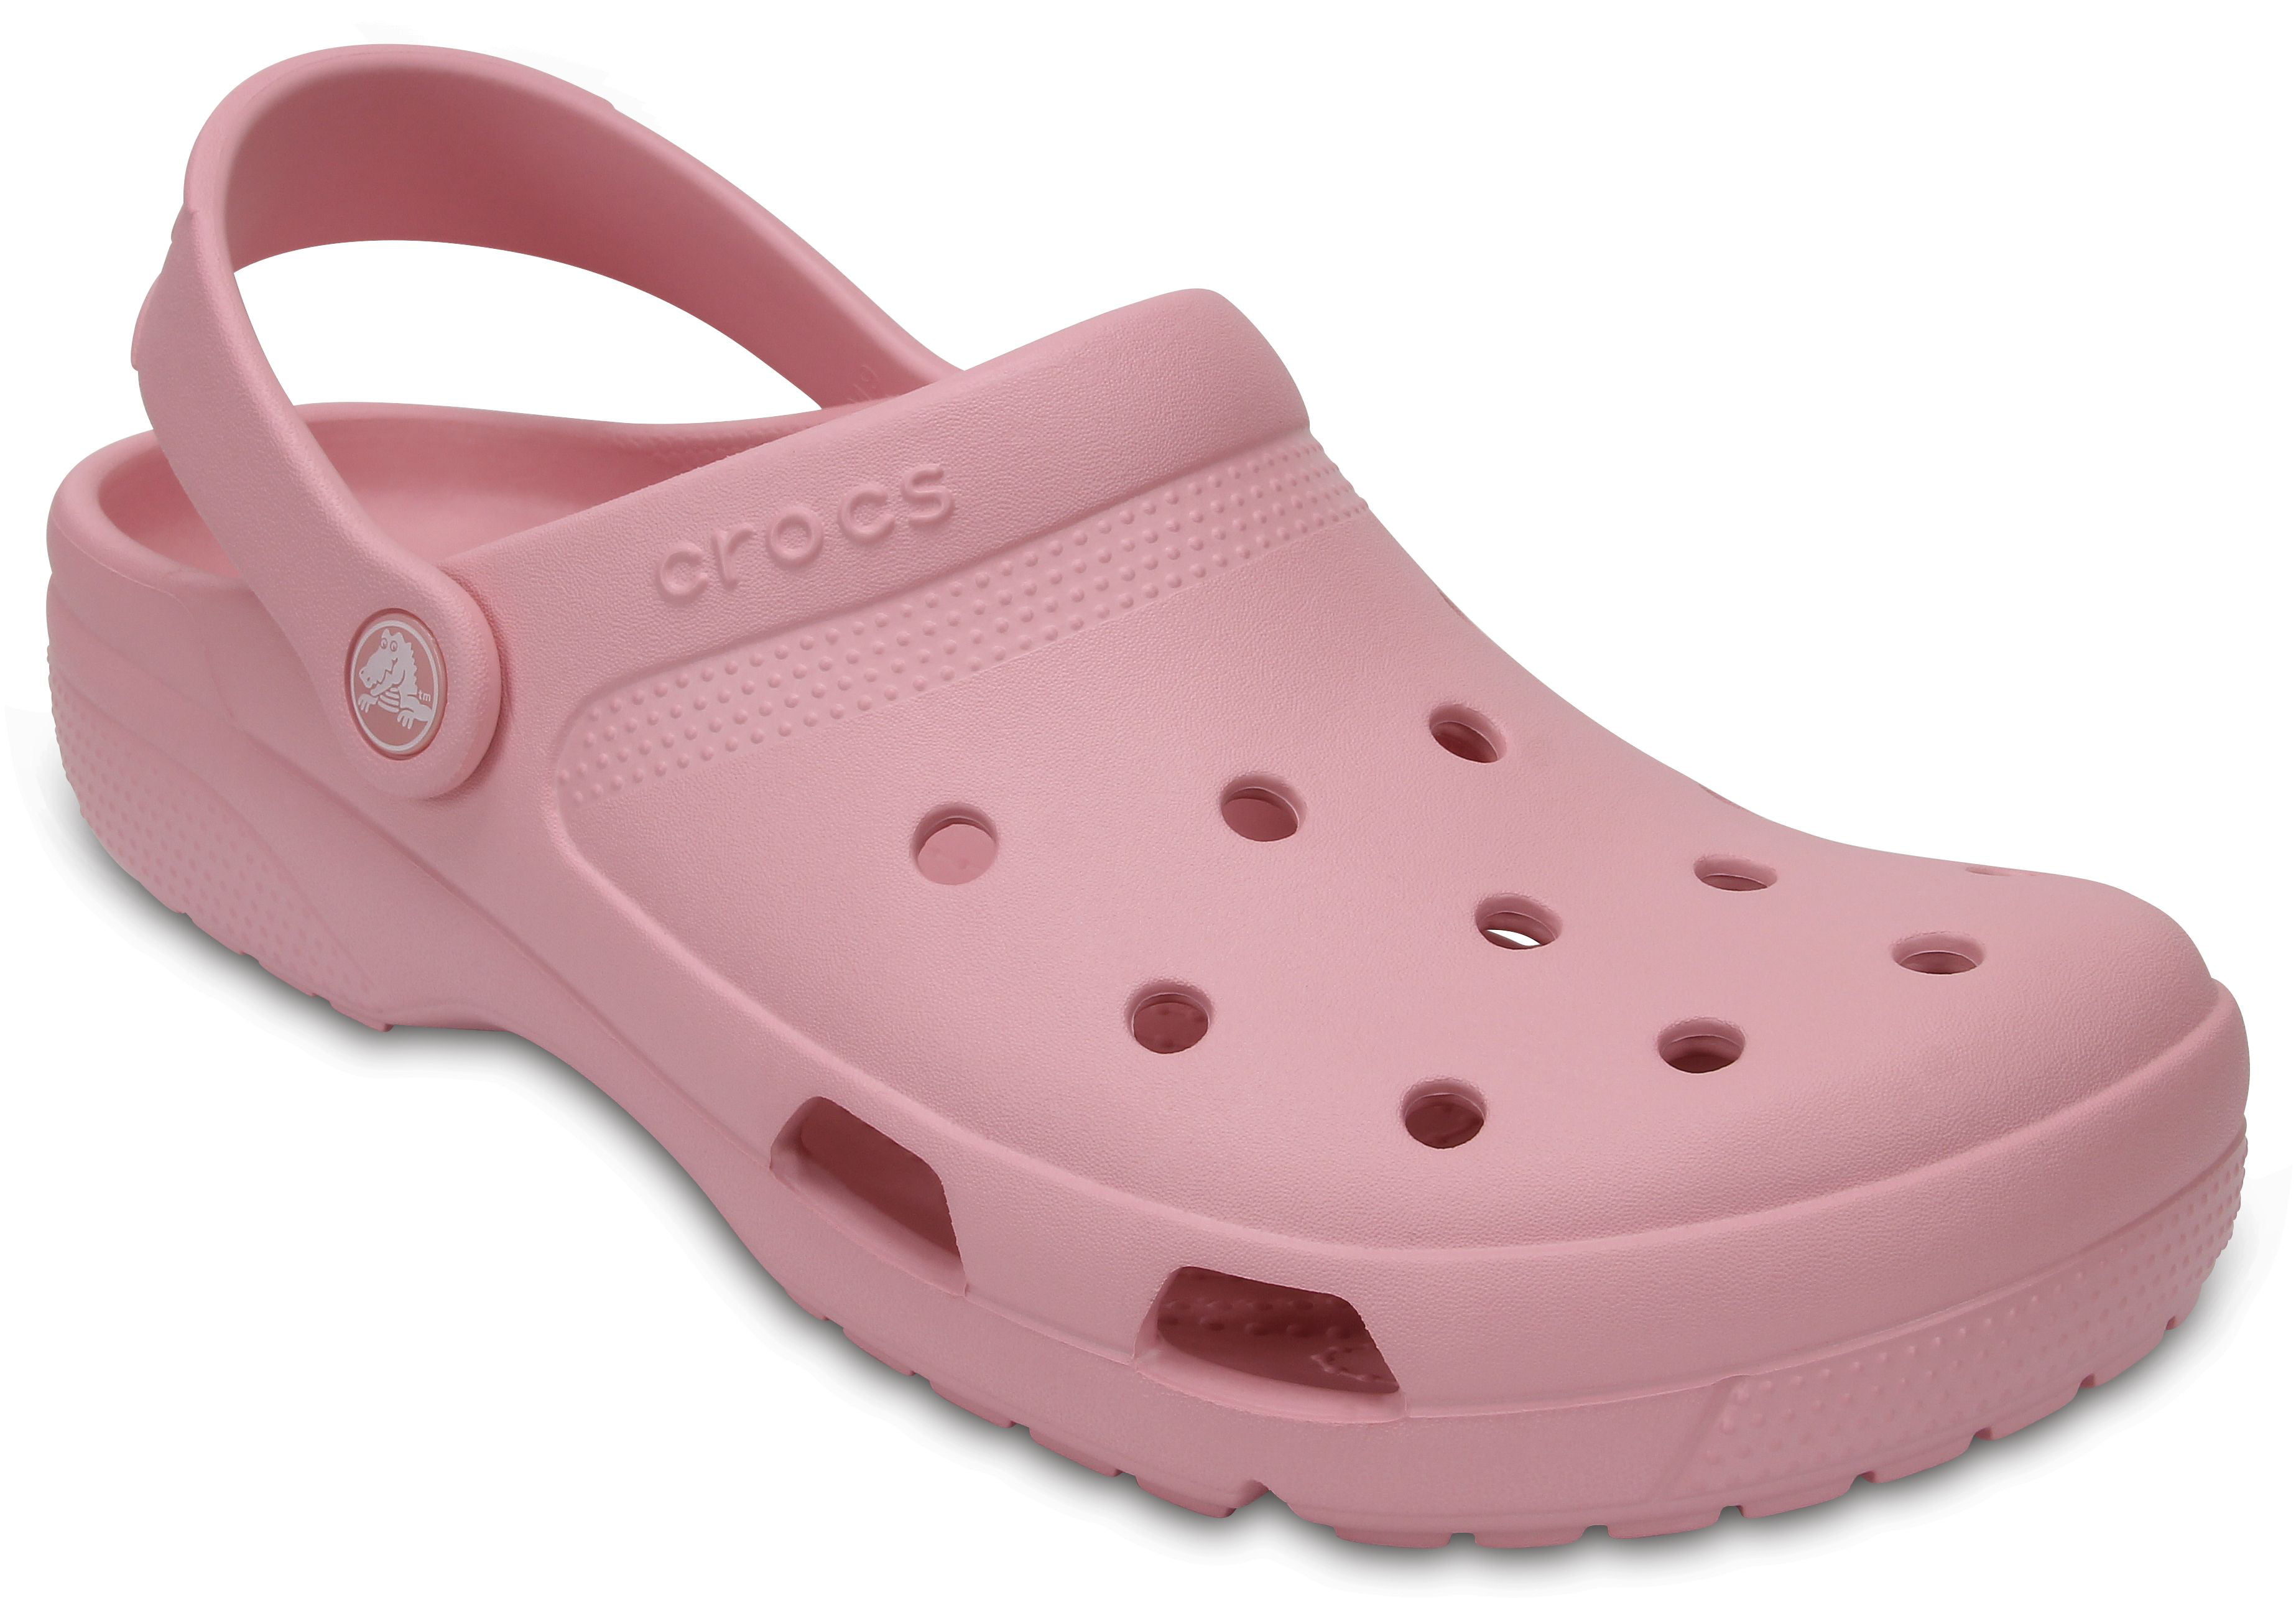 hamricks crocs